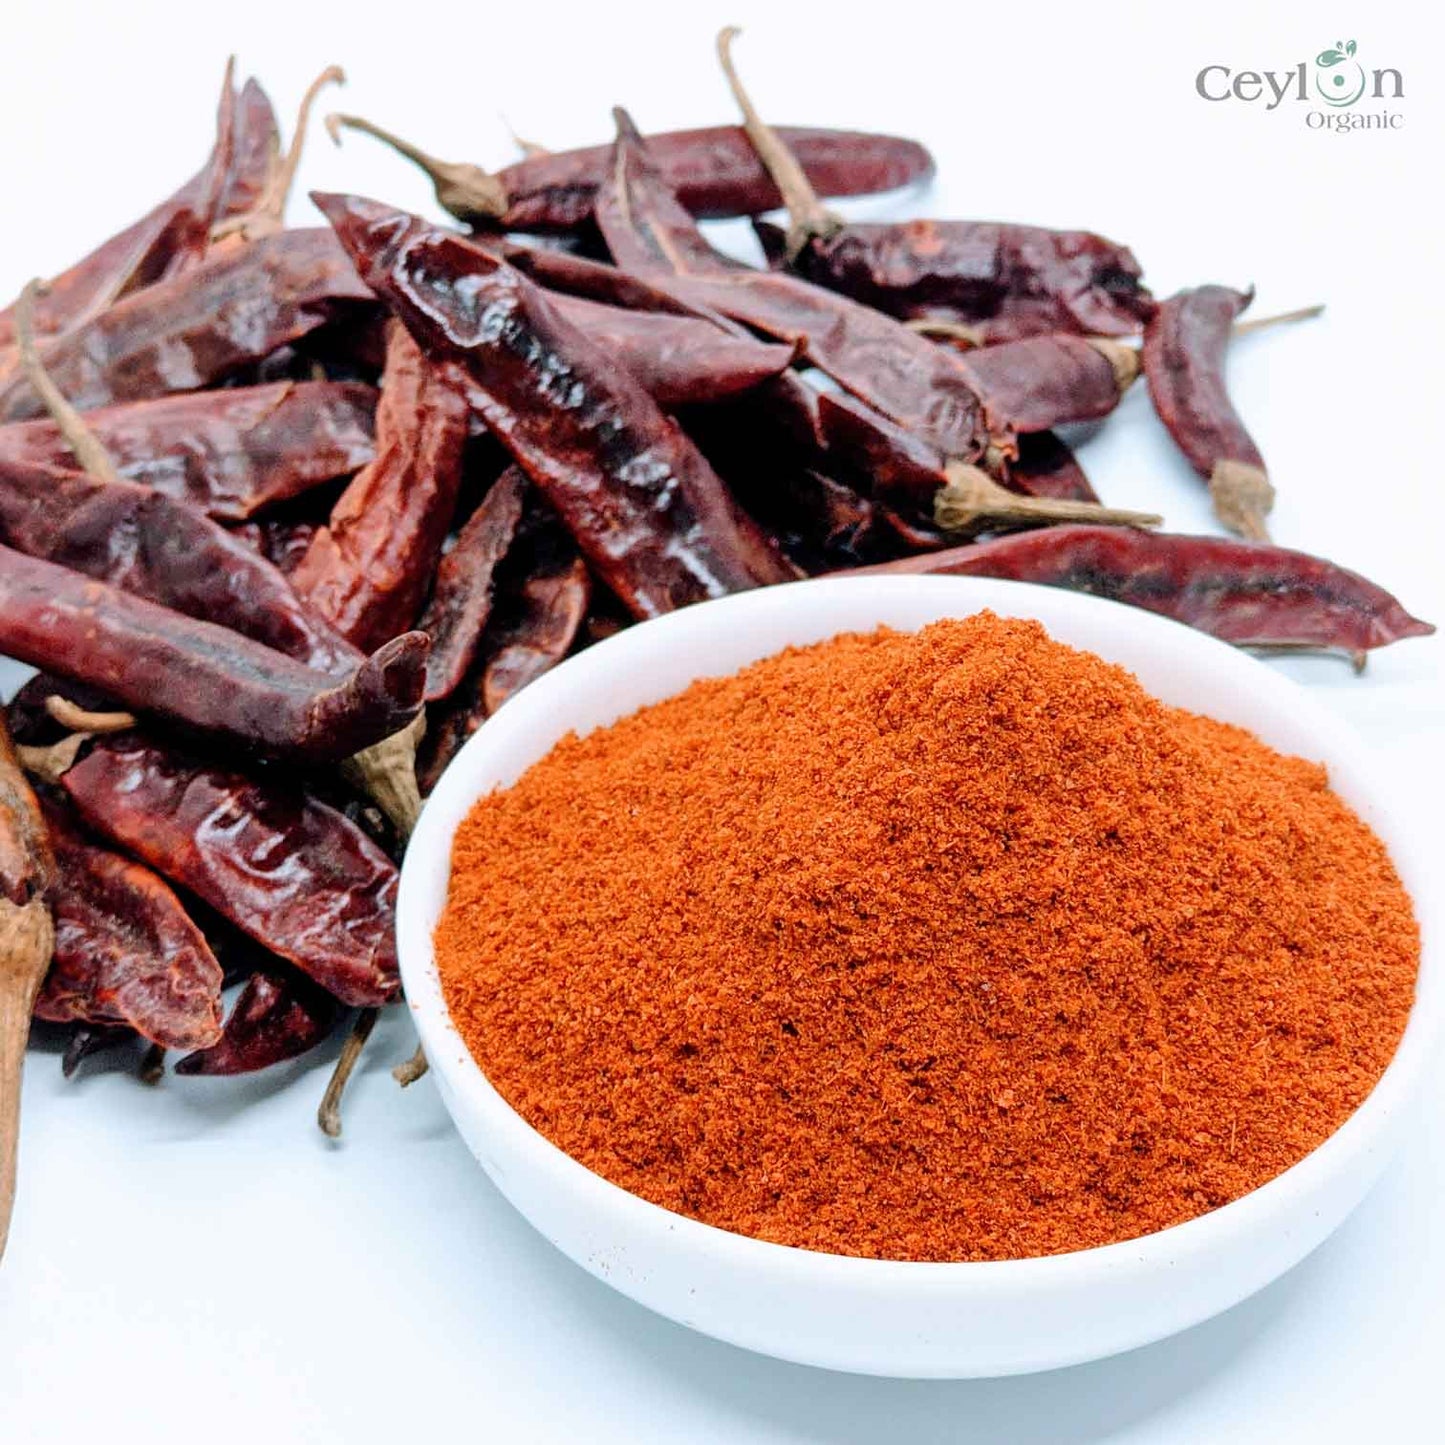 500g+ Ceylon Chilli Powder 100% Organic Natural Premium Sri Lankan Quality | Ceylon Organic-3